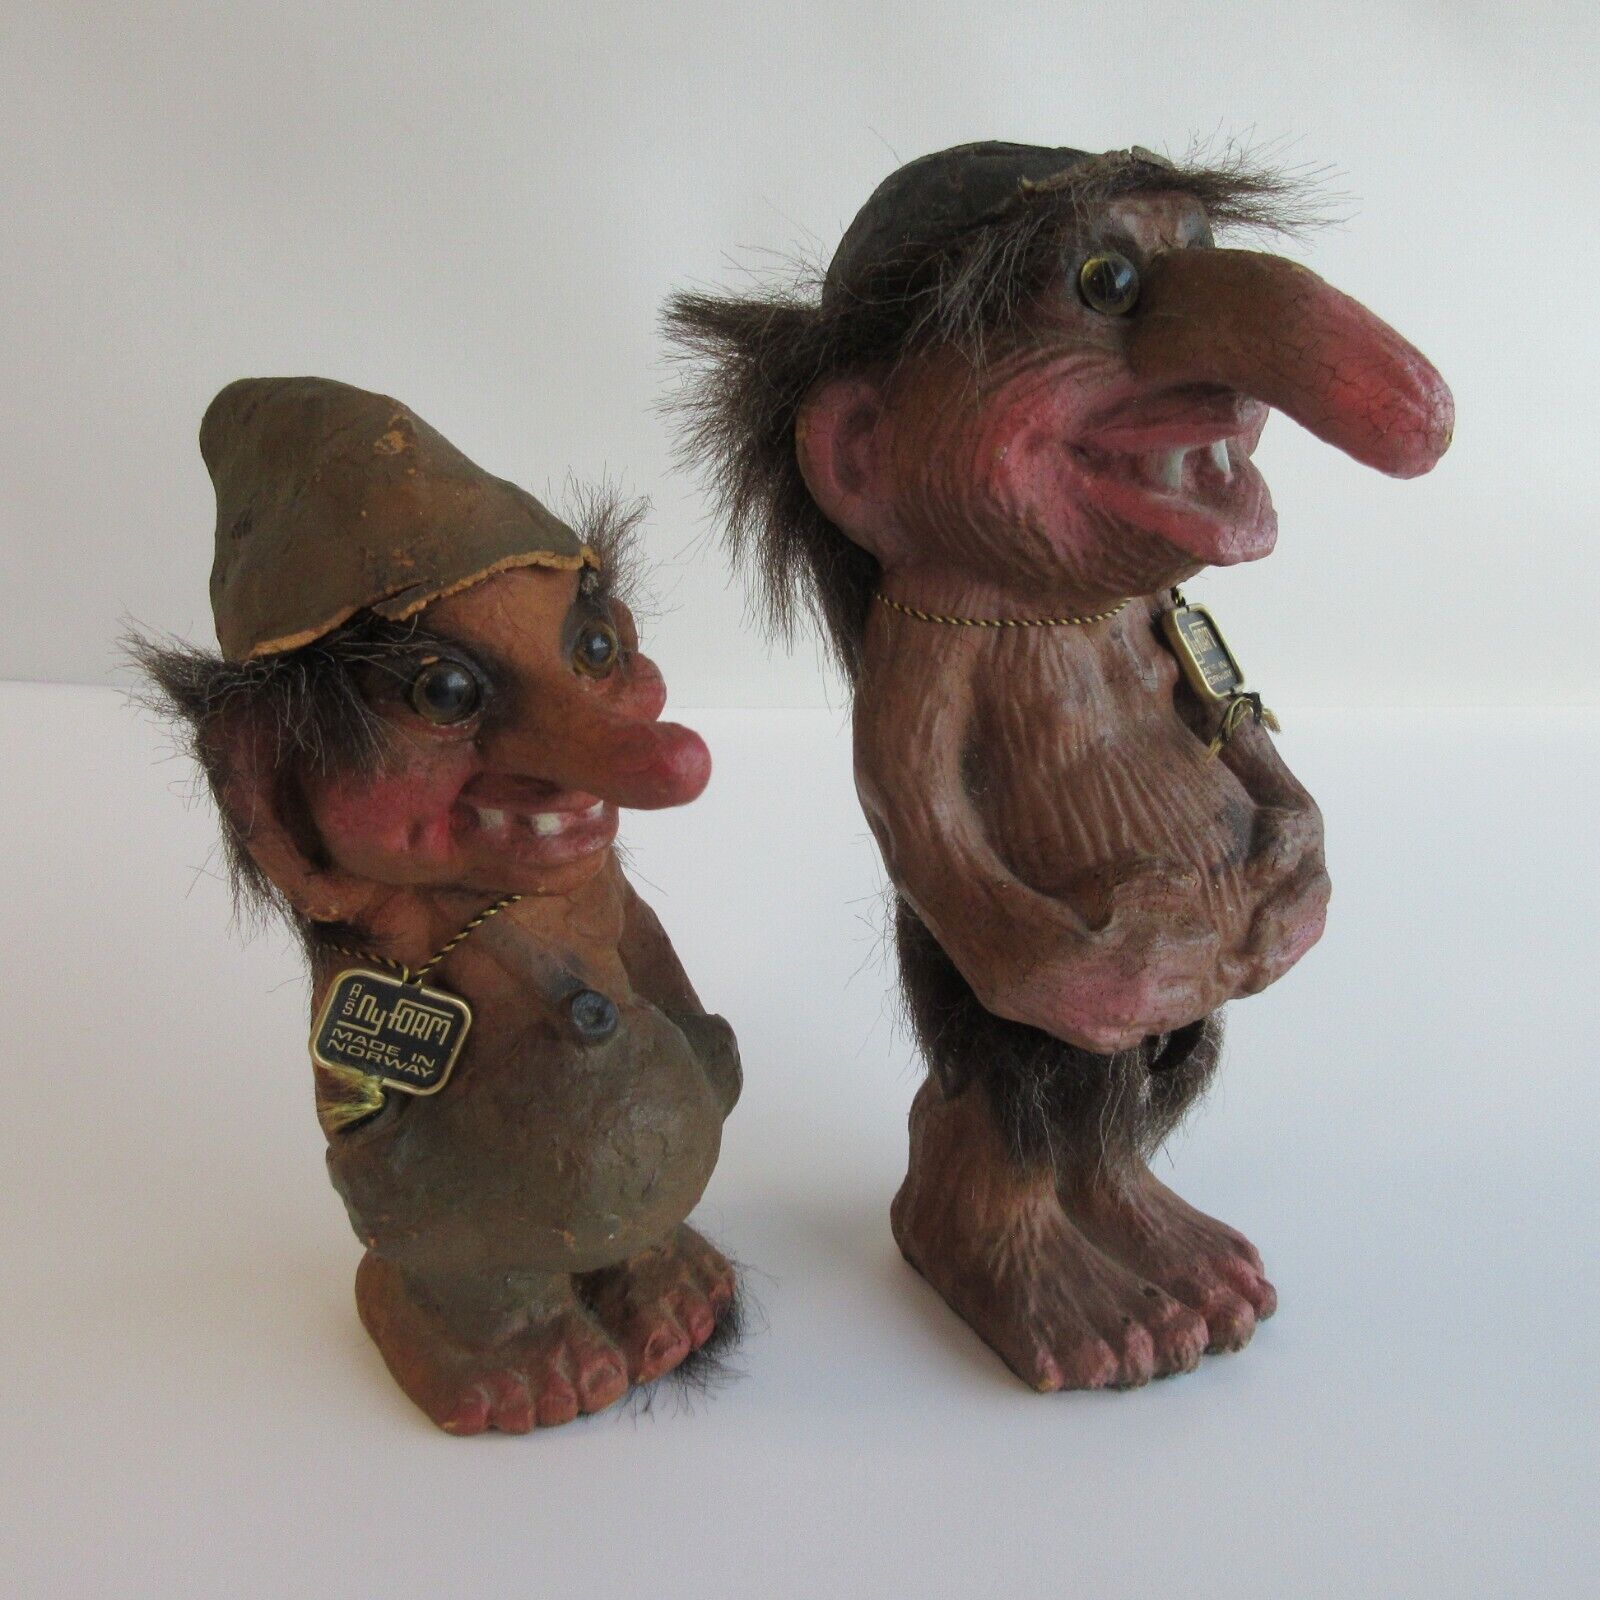 Nyform NY Form trolls made in Norway lot of 2 VTG creepy figures